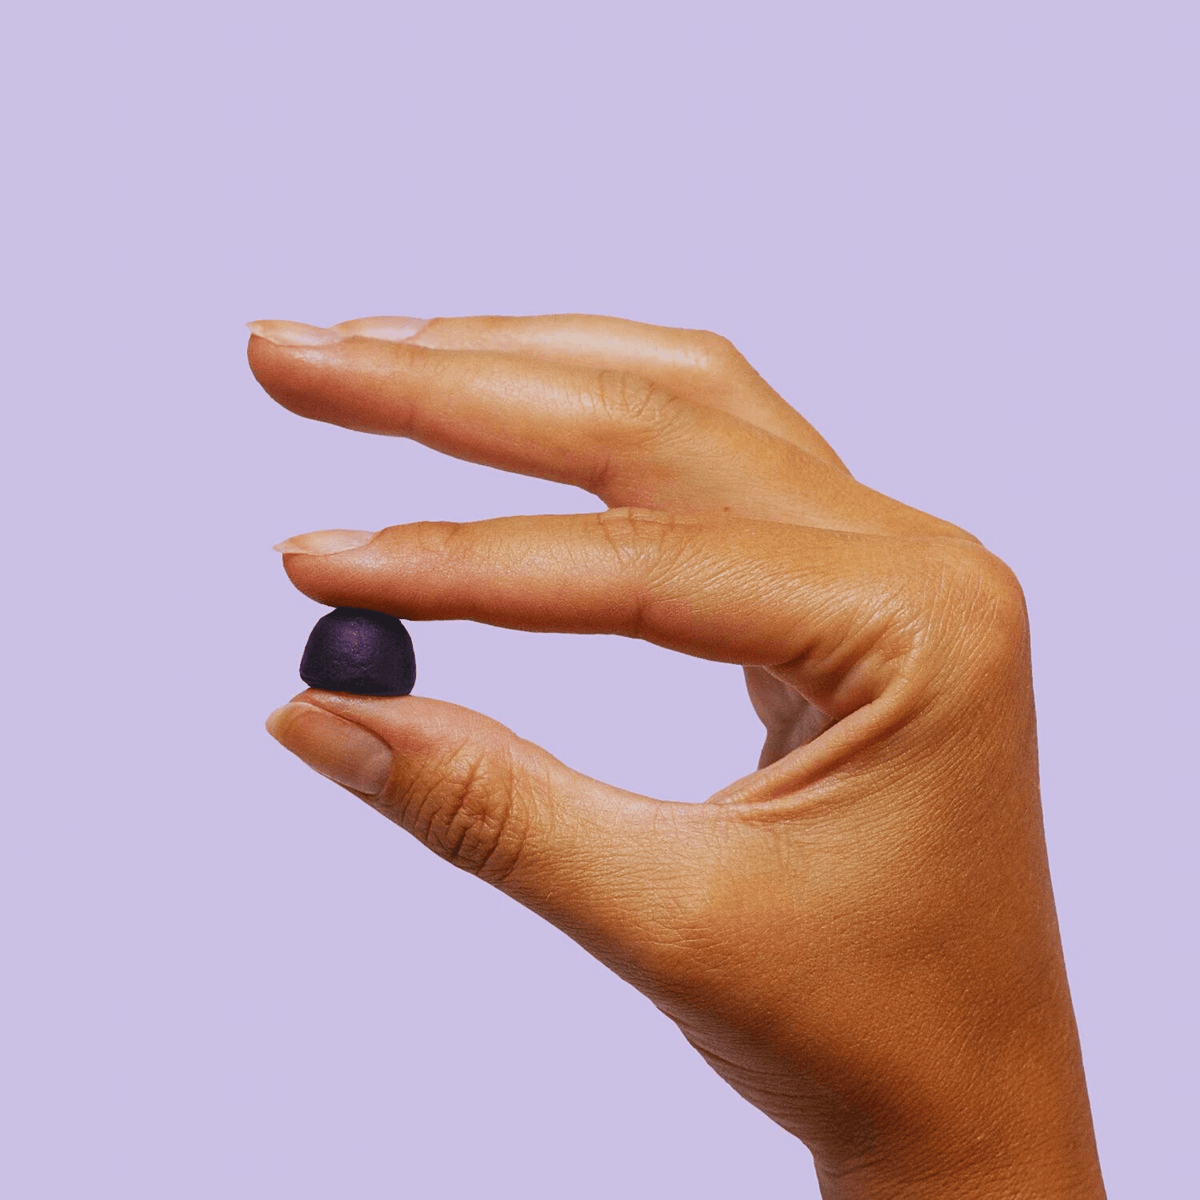 a hand holding a gummy